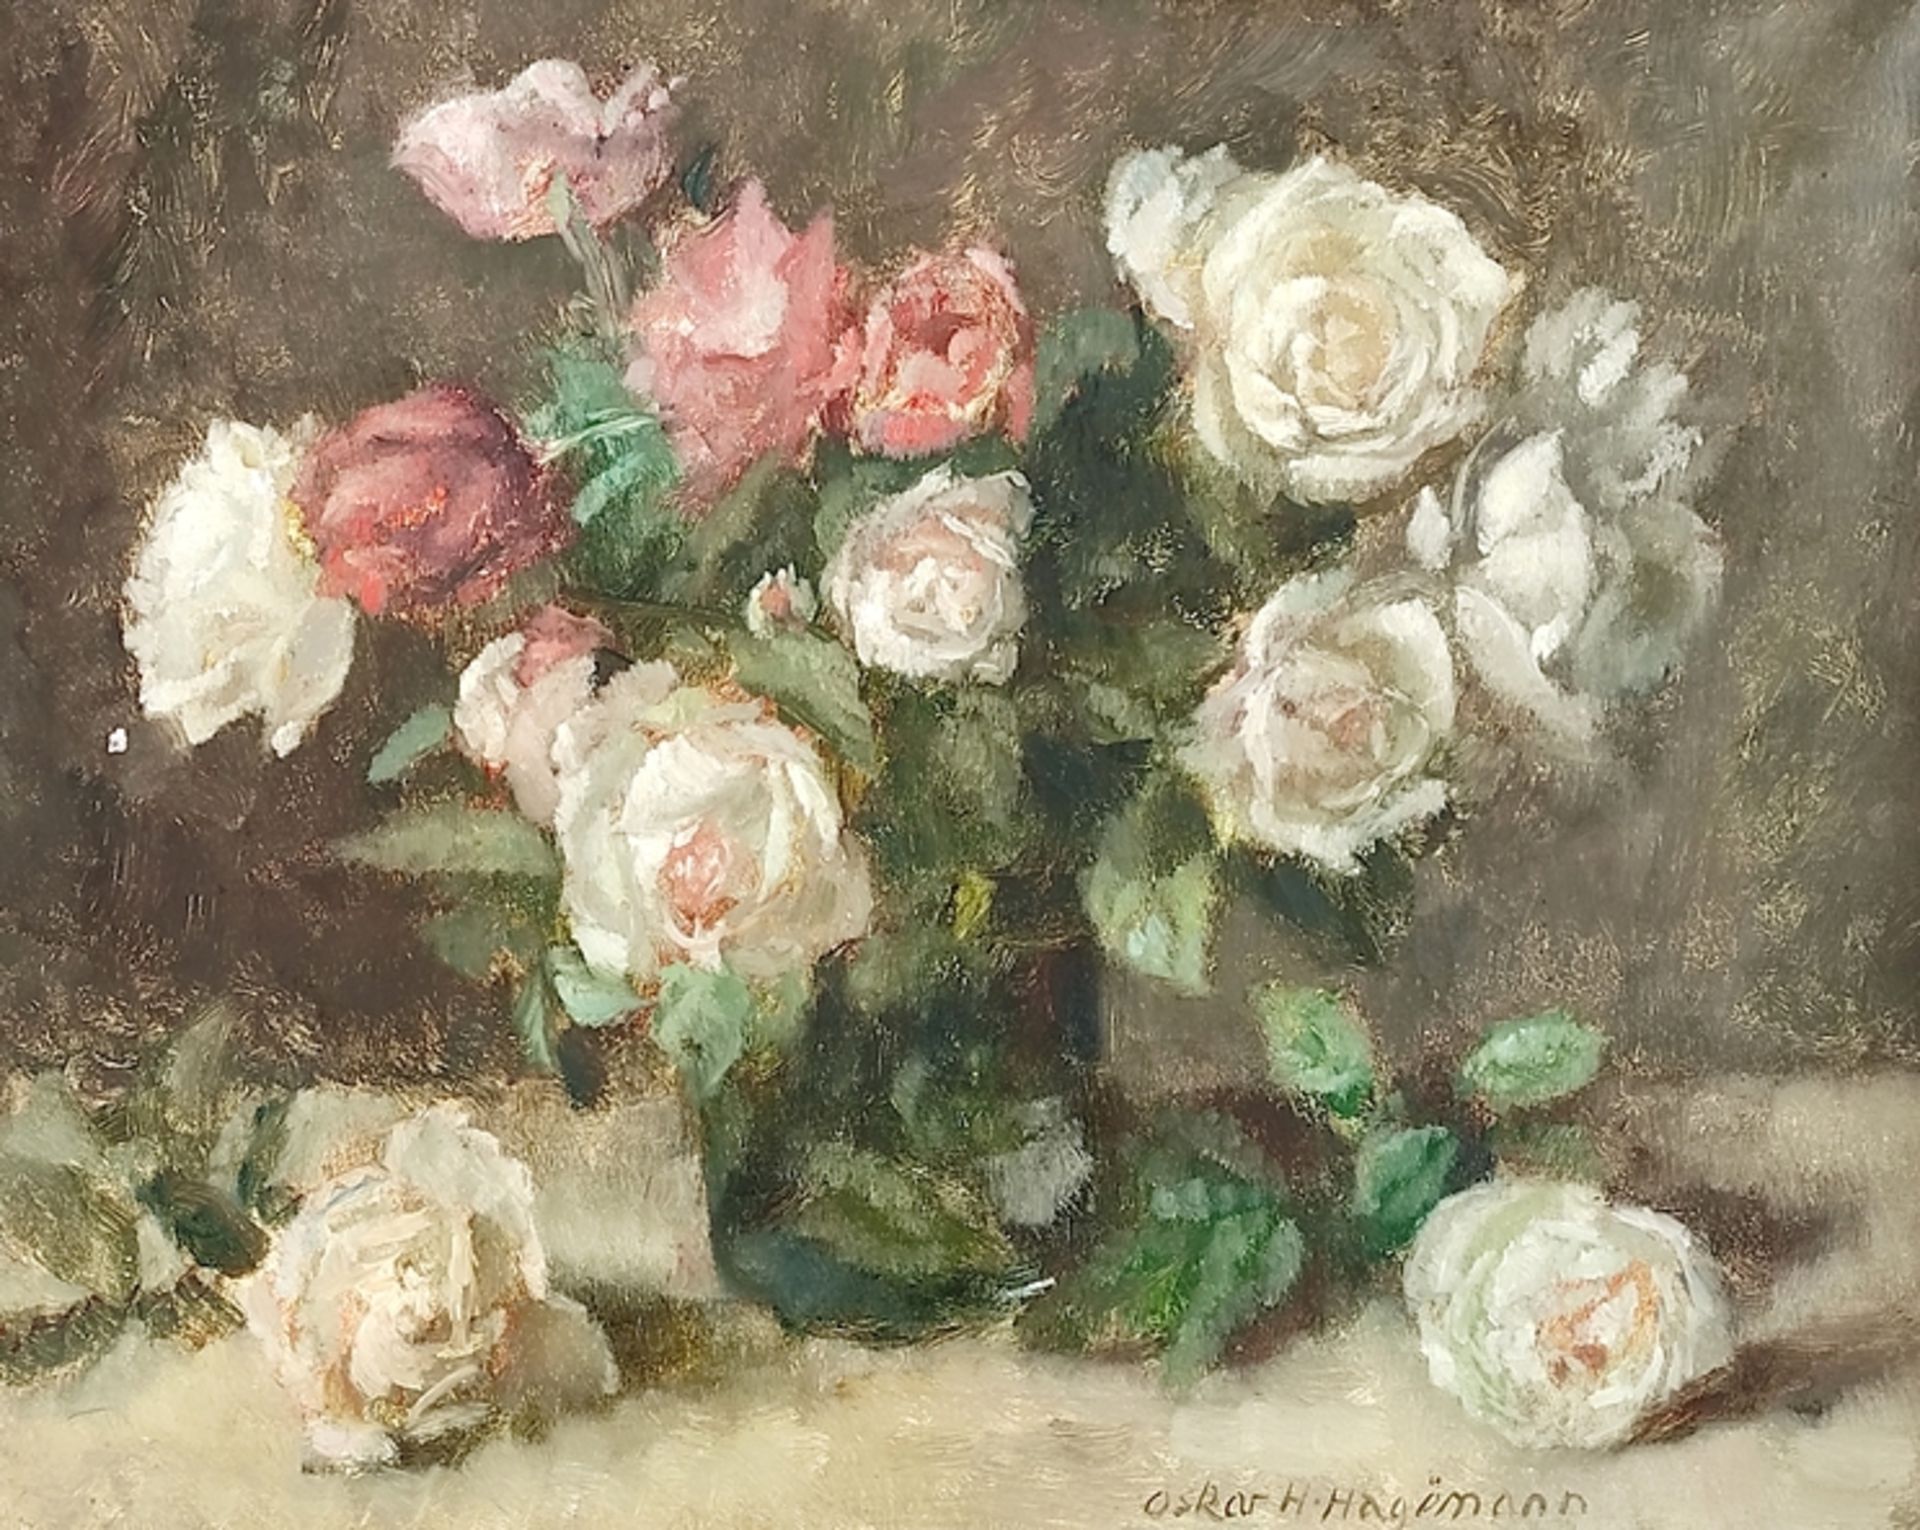 Hagemann, Oskar H. (1888 Holoubkov - 1984 Karlsruhe) "Floral Still Life" with roses in vase, oil on